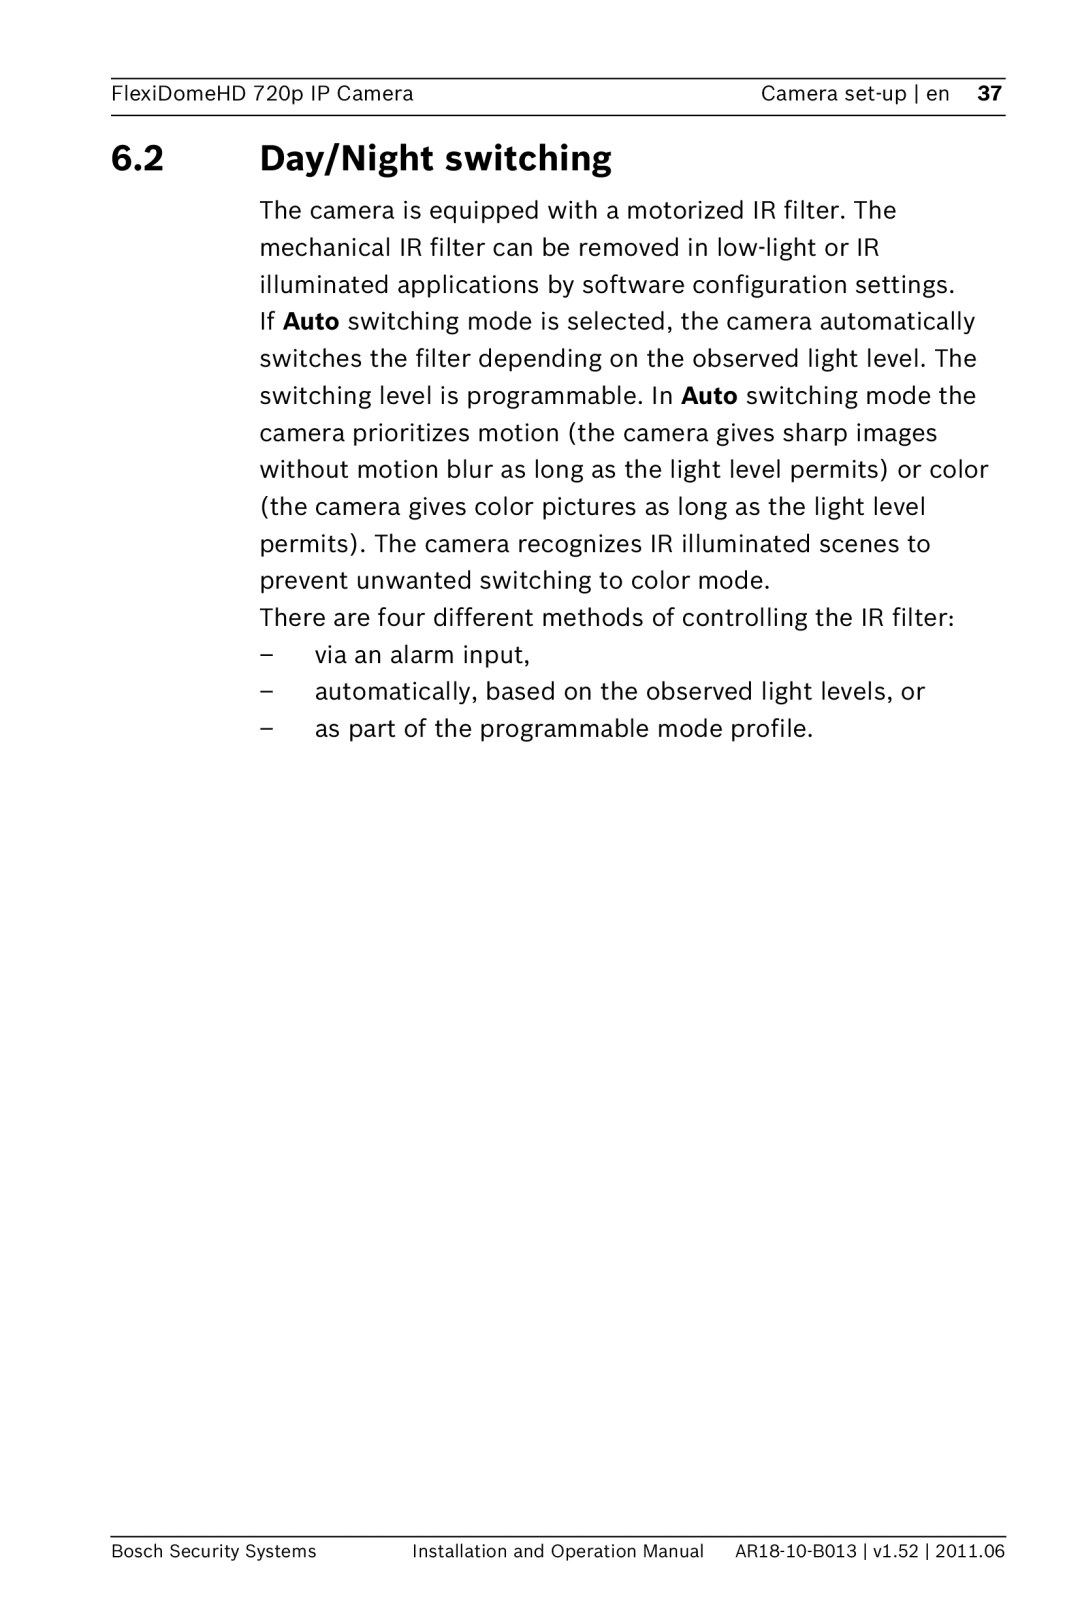 Bosch Appliances NDN-921 operation manual 6.2Day/Night switching 